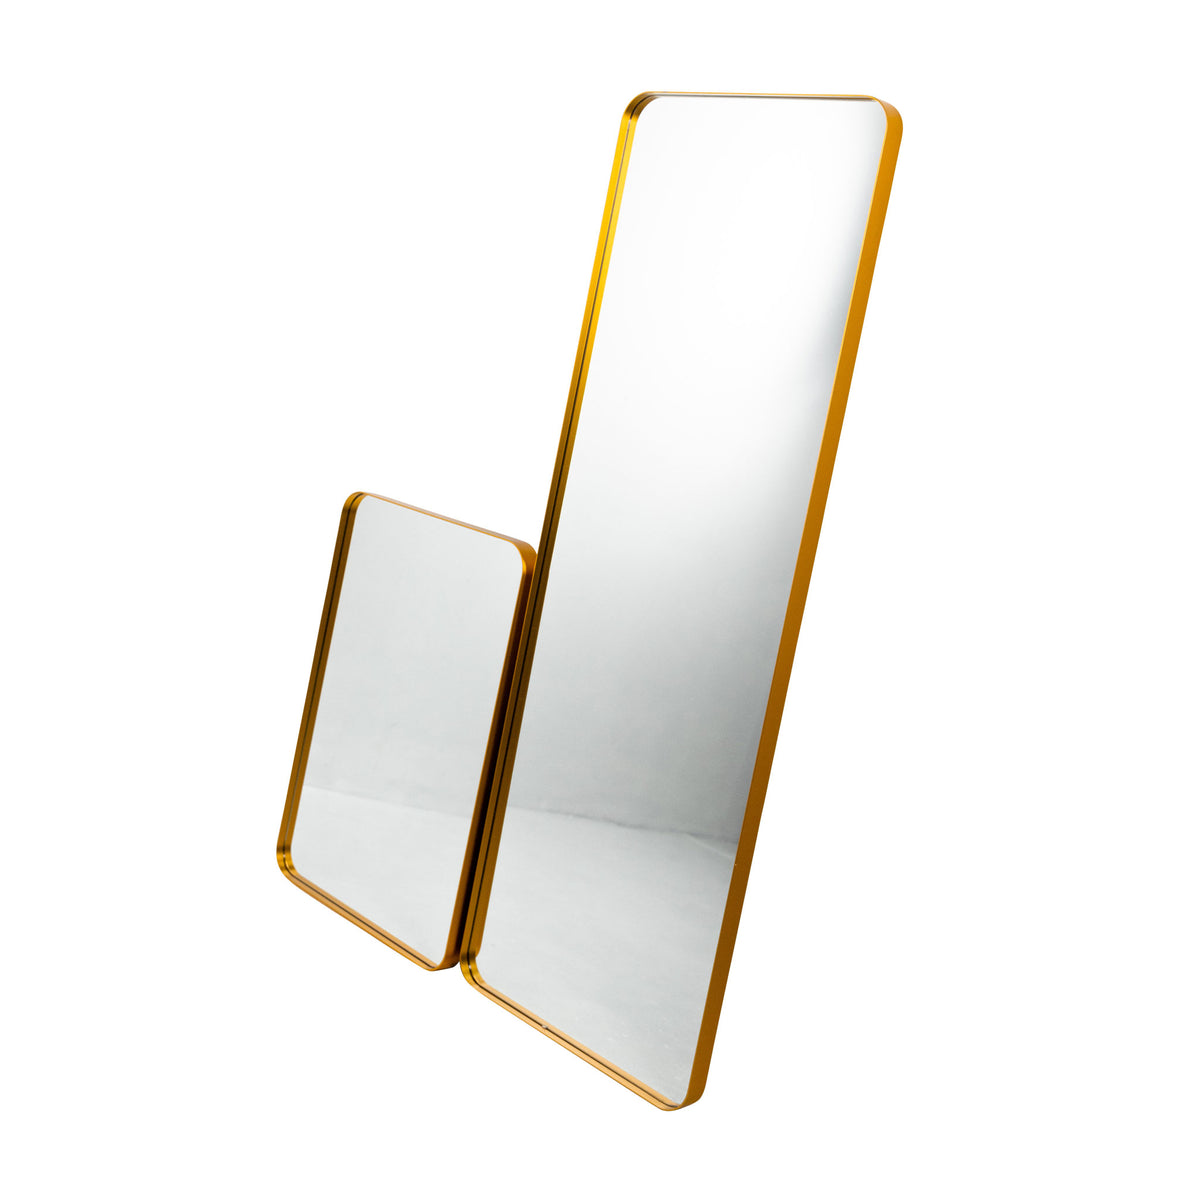 Sienna Radius Corners Gold Mirror - 500x750mm